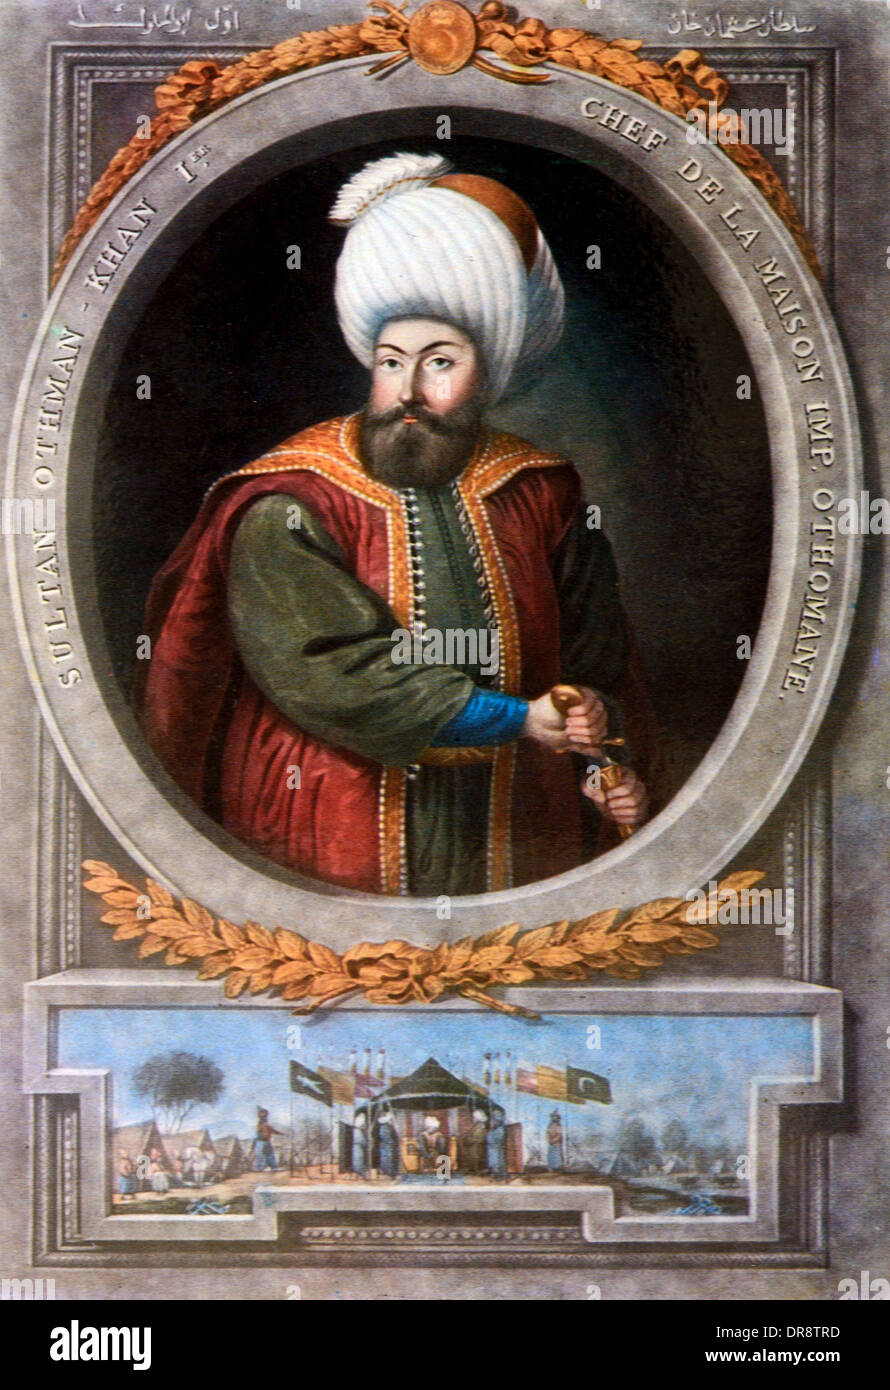 Ottoman Turkish Sultan Osman I (1258-1326) Othman I or Osman Gazi Portrait Painting Stock Photo